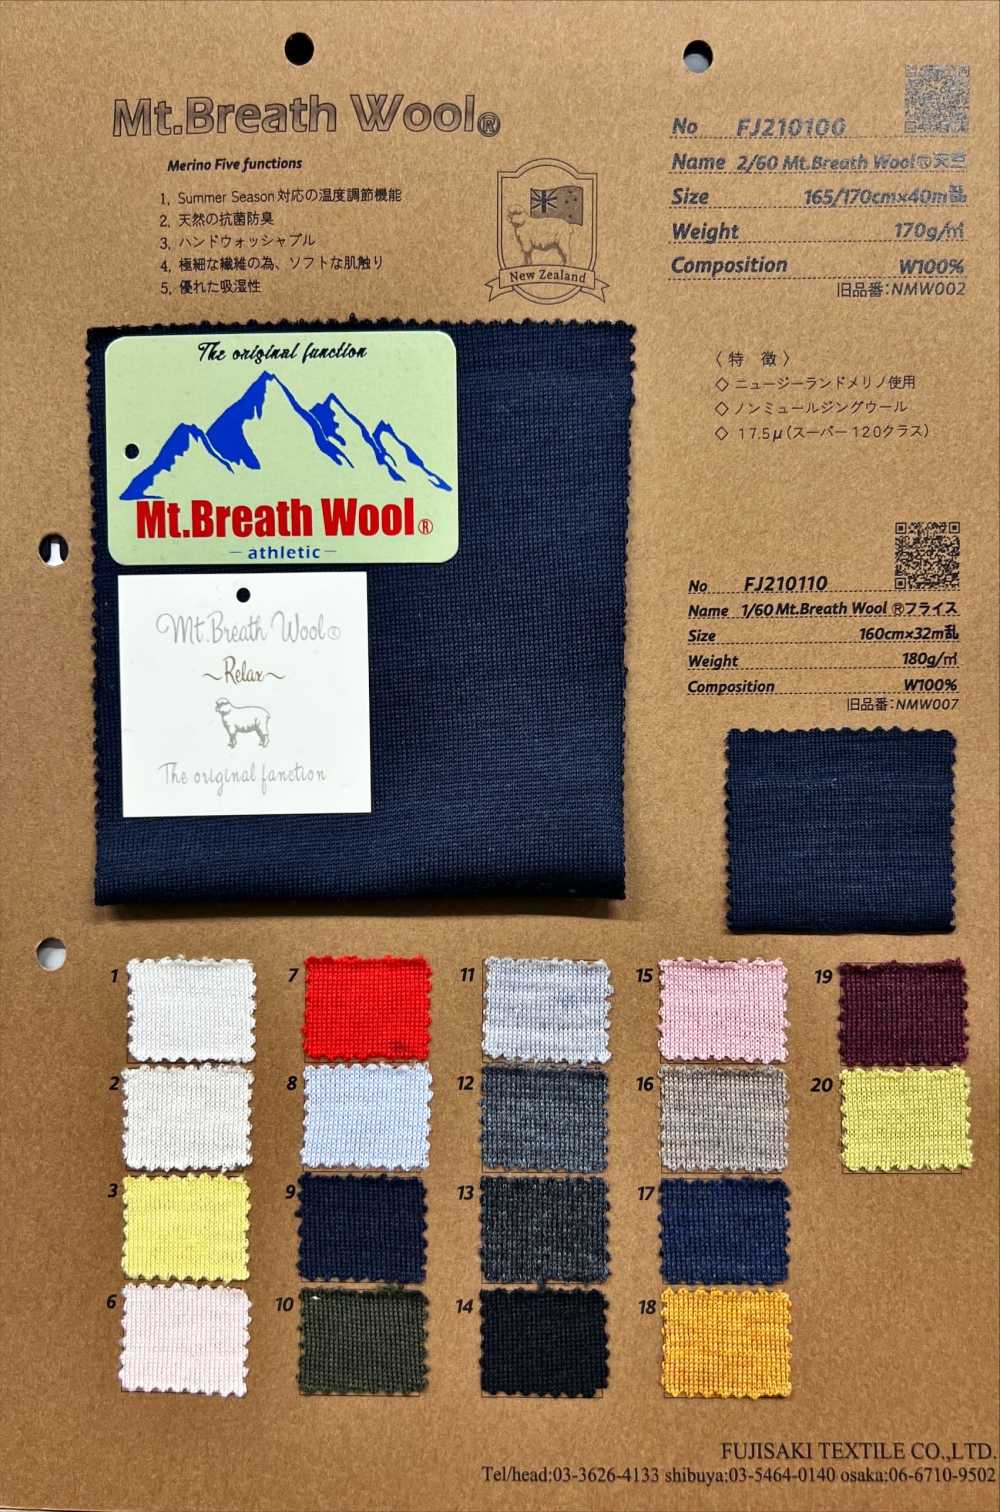 FJ210100 2/60 Mt.Breath 羊毛针织天竺平针织物[面料] Fujisaki Textile